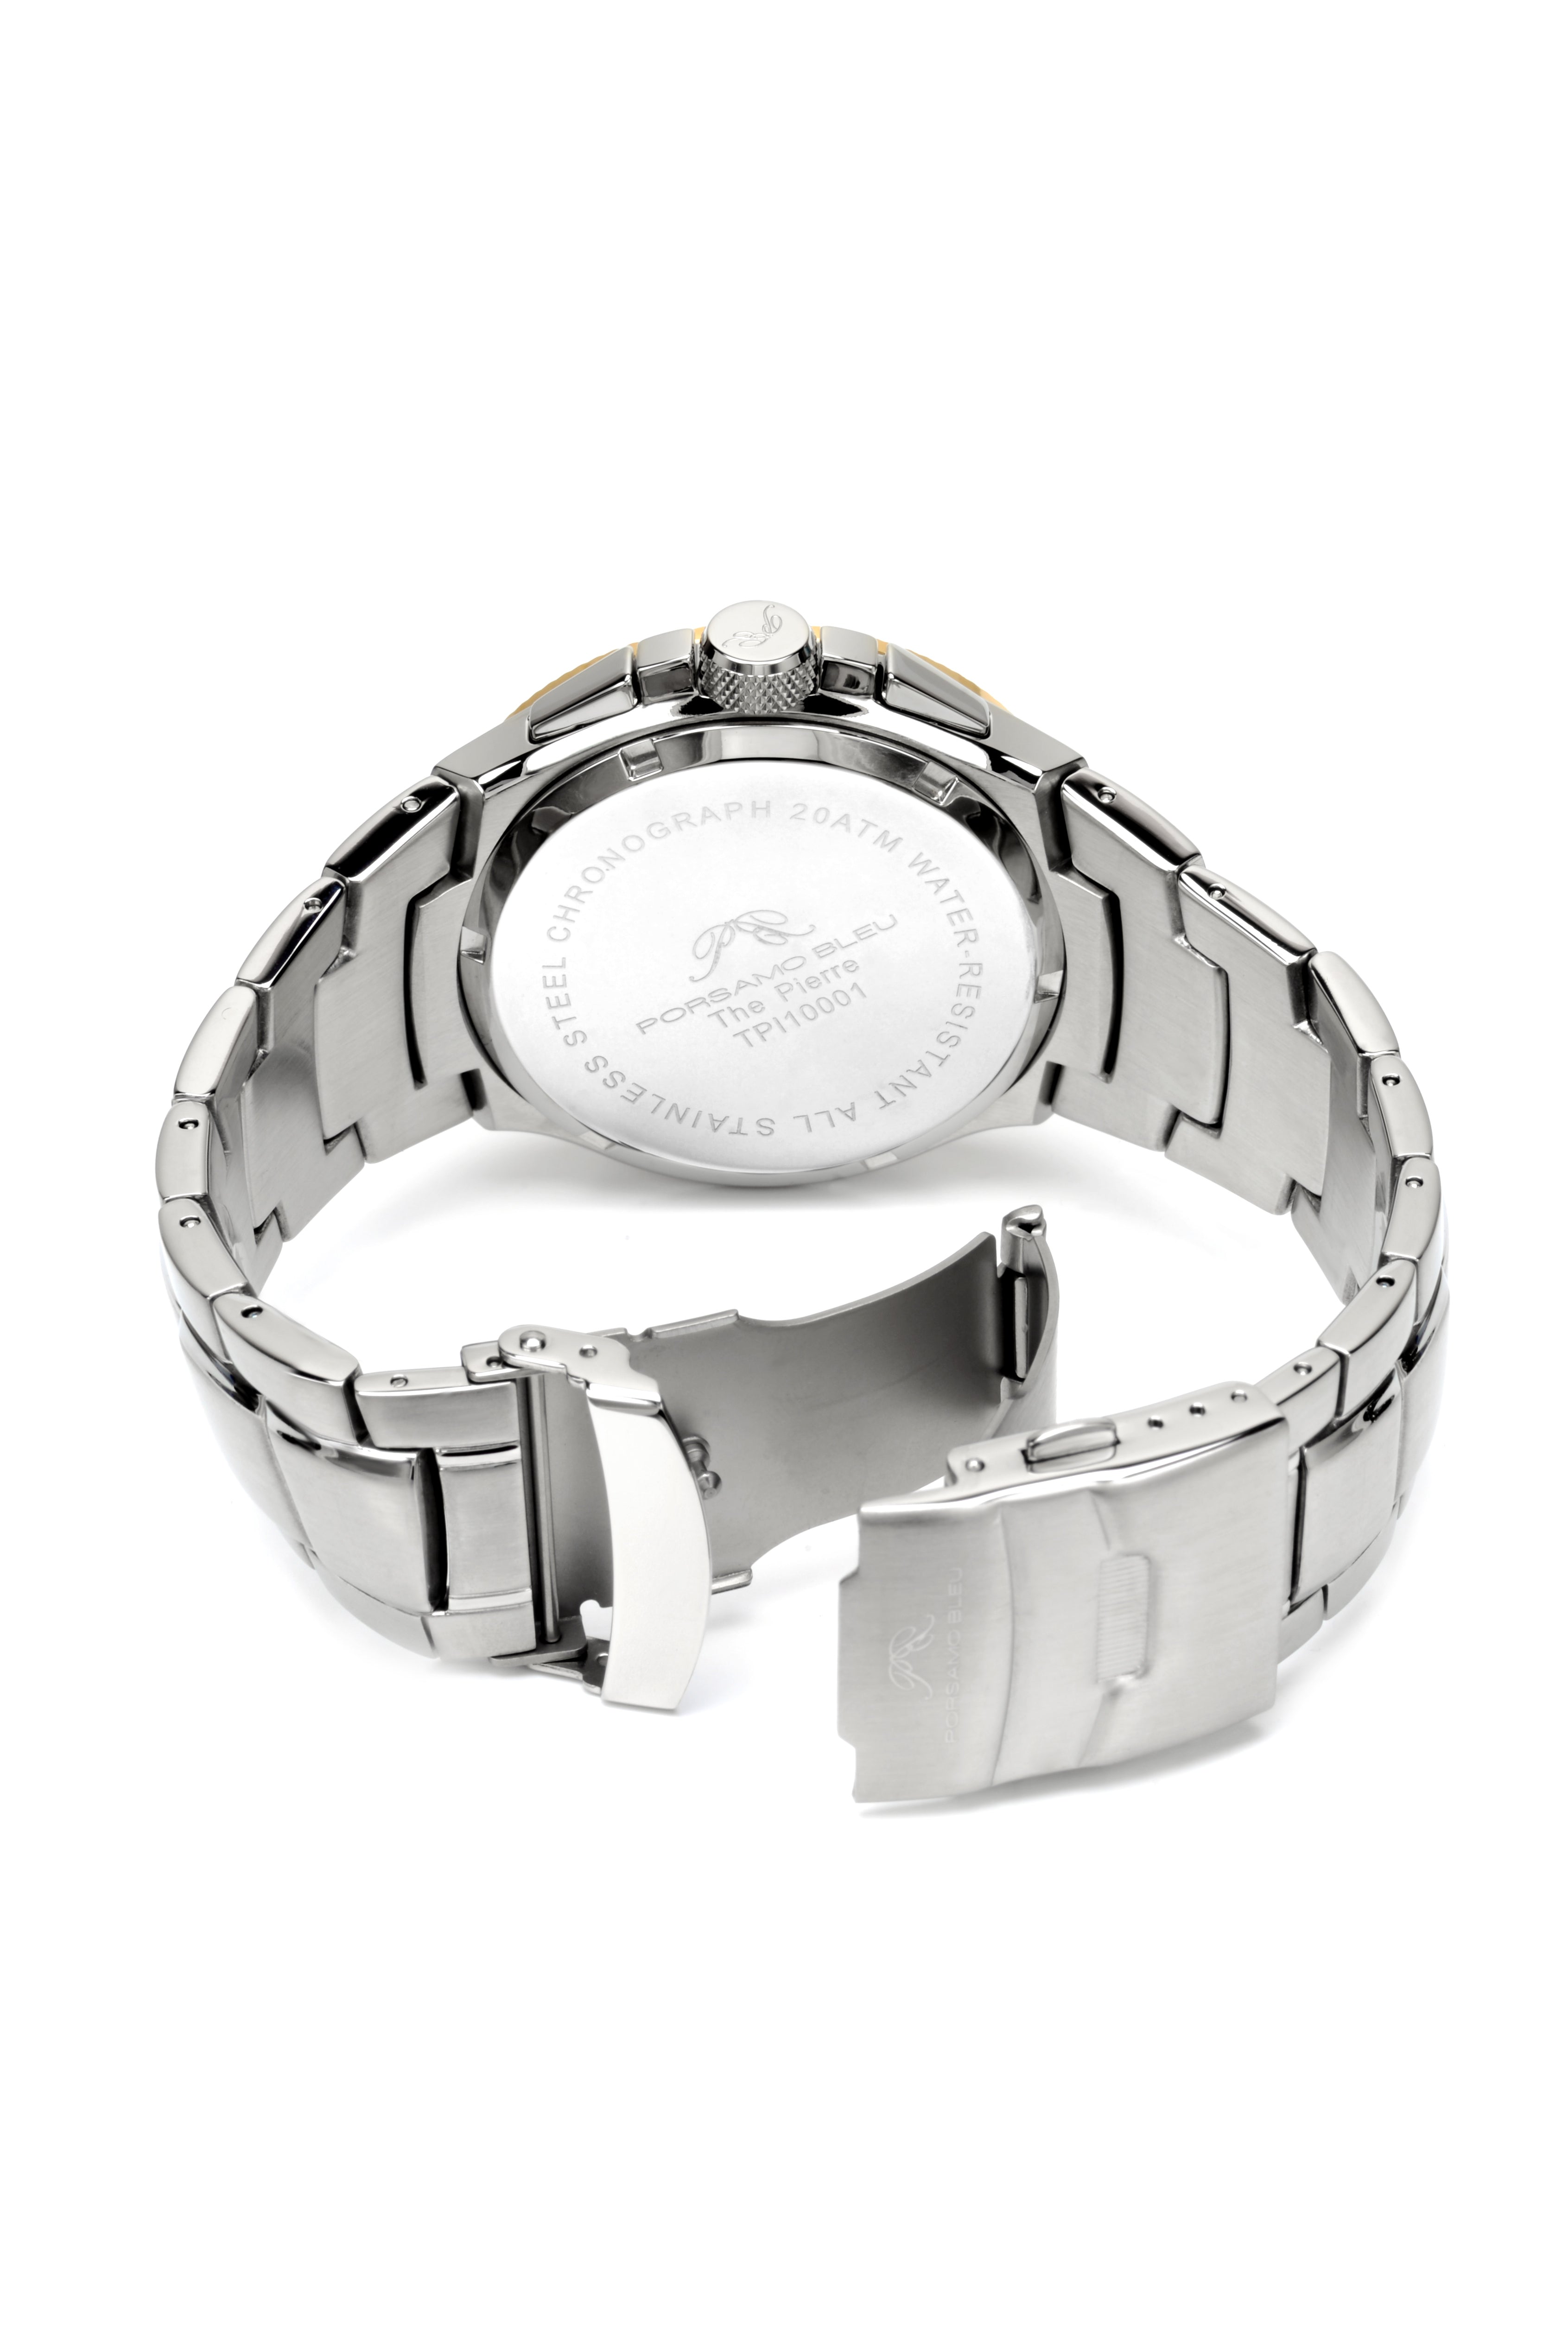 Porsamo Bleu Pierre luxury chronograph men's stainless steel watch, silver, gold, white 251BPIS